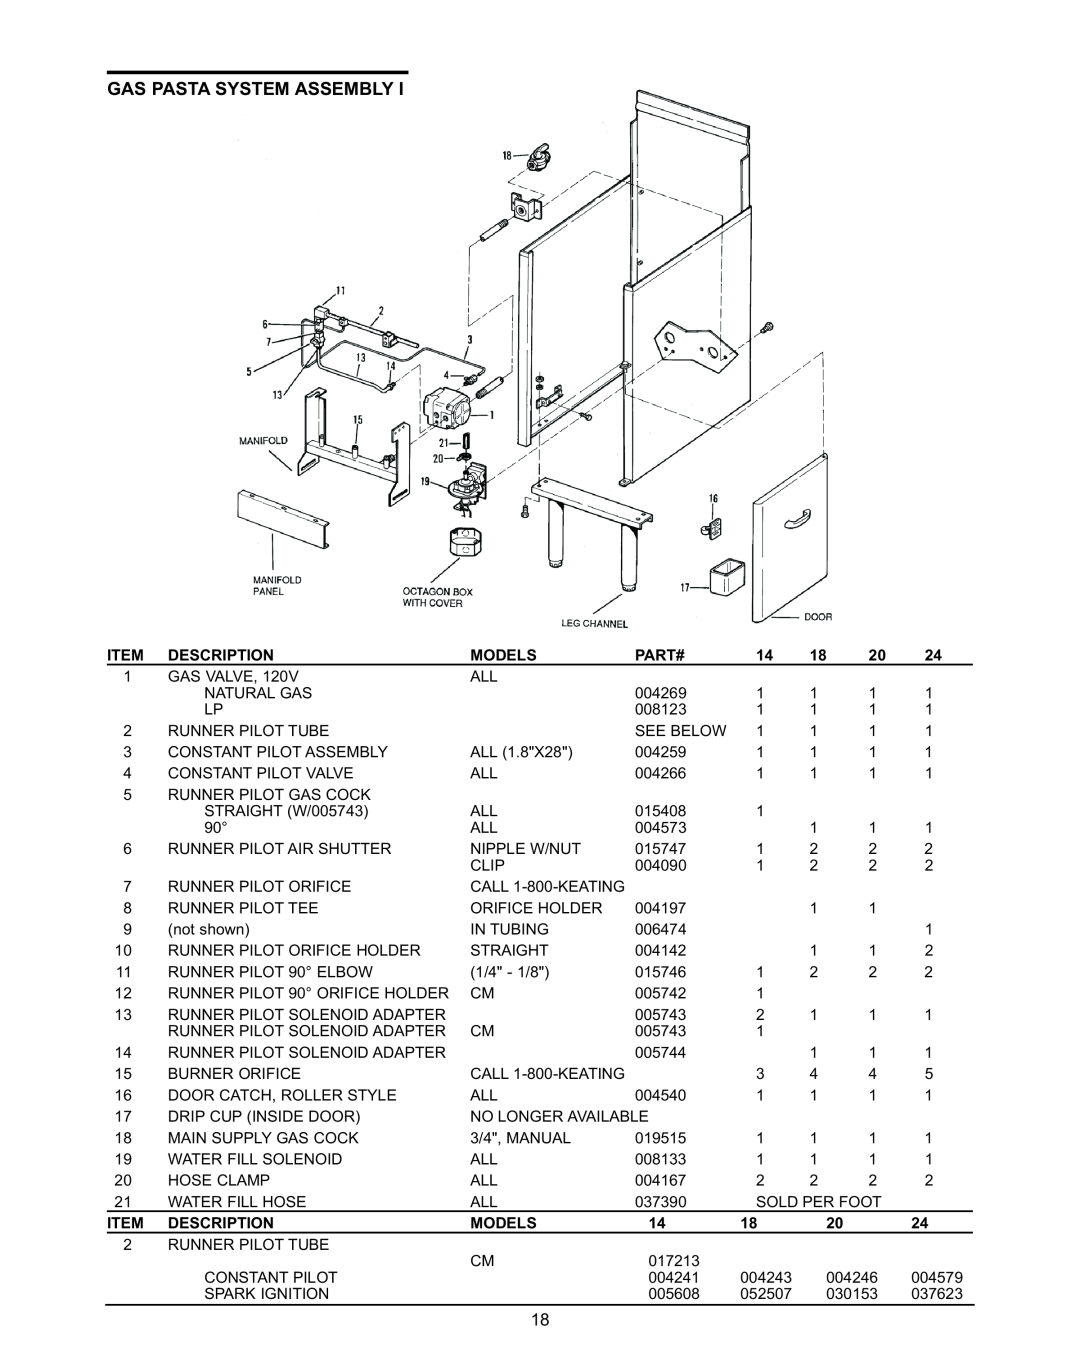 Keating Of Chicago Gas Custom Pasta System manual Gas Pasta System Assembly, Description, Models, Part# 